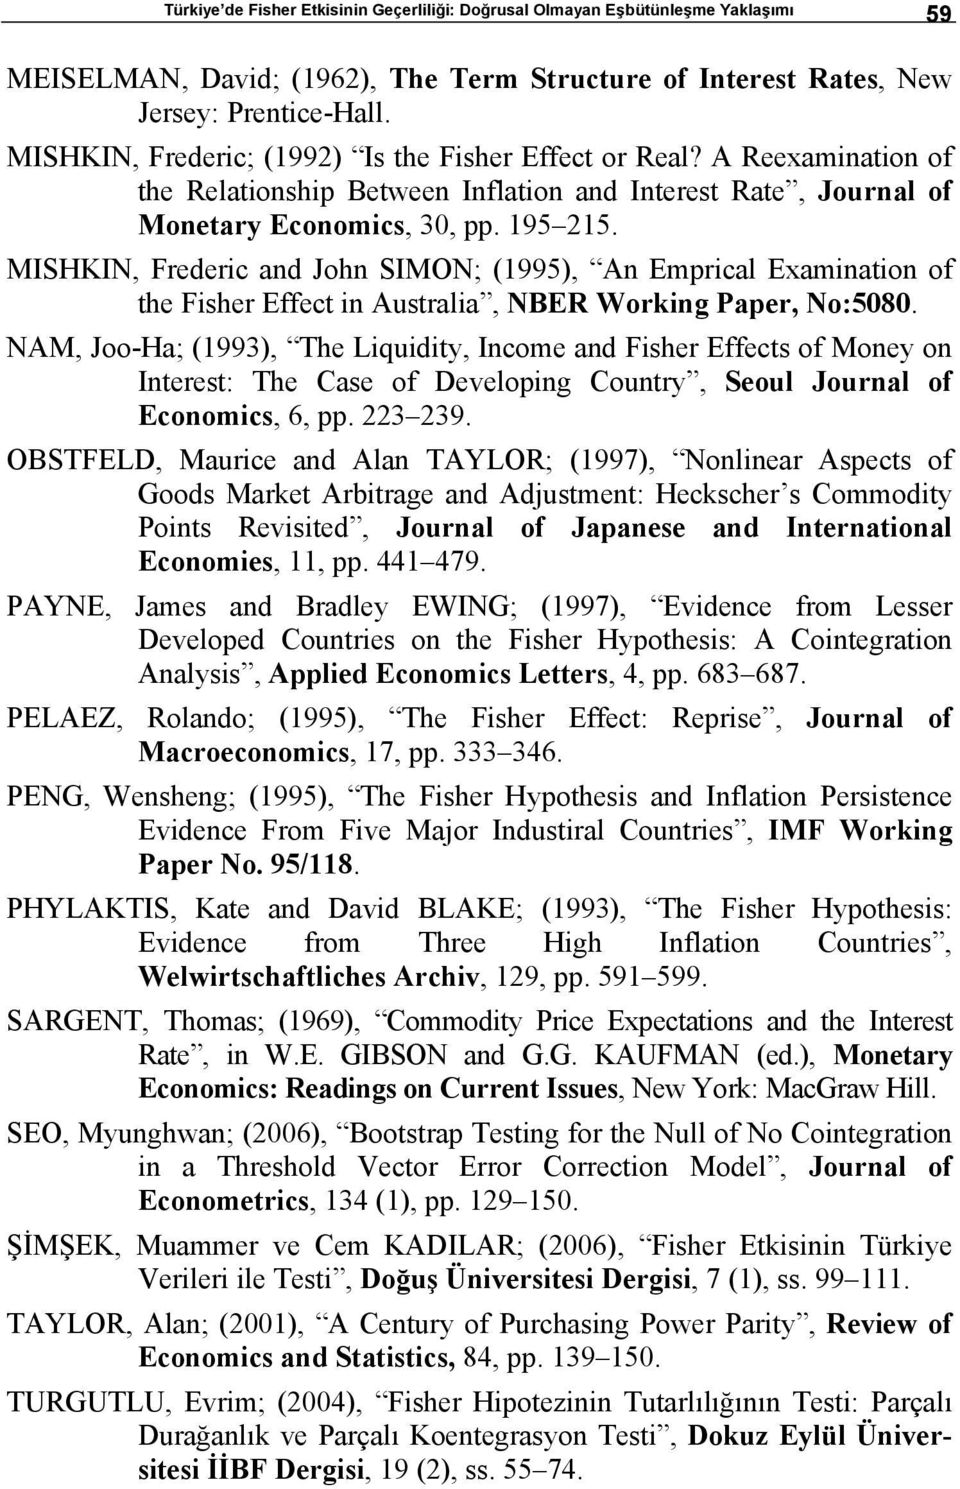 MISHKIN, Frederic and John SIMON; (995), An Emprical Examinaion of he Fisher Effec in Ausralia, NBER Working Paper, No:5080.